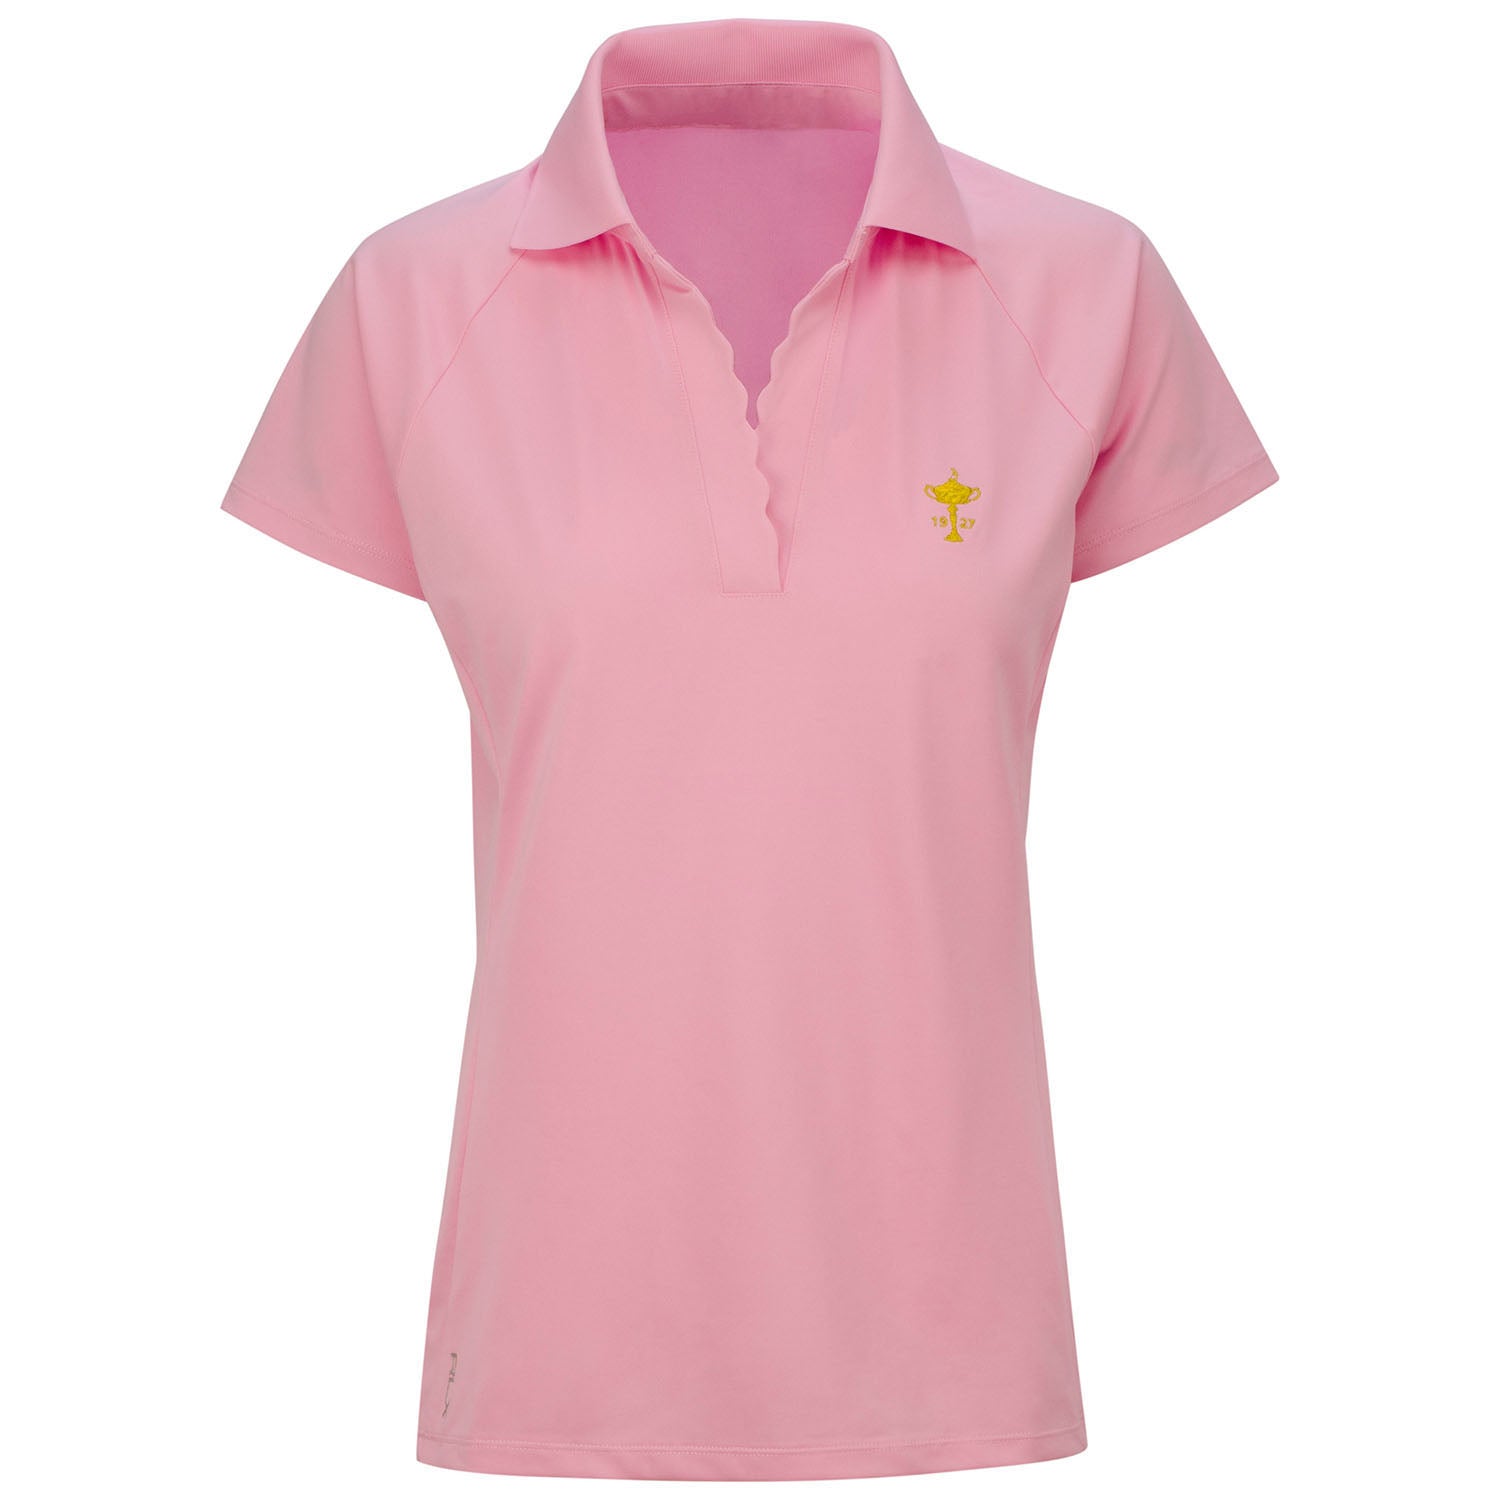 Ryder Cup Ralph Lauren Women's Short Sleeve Scallop Placket in Pink- Front View